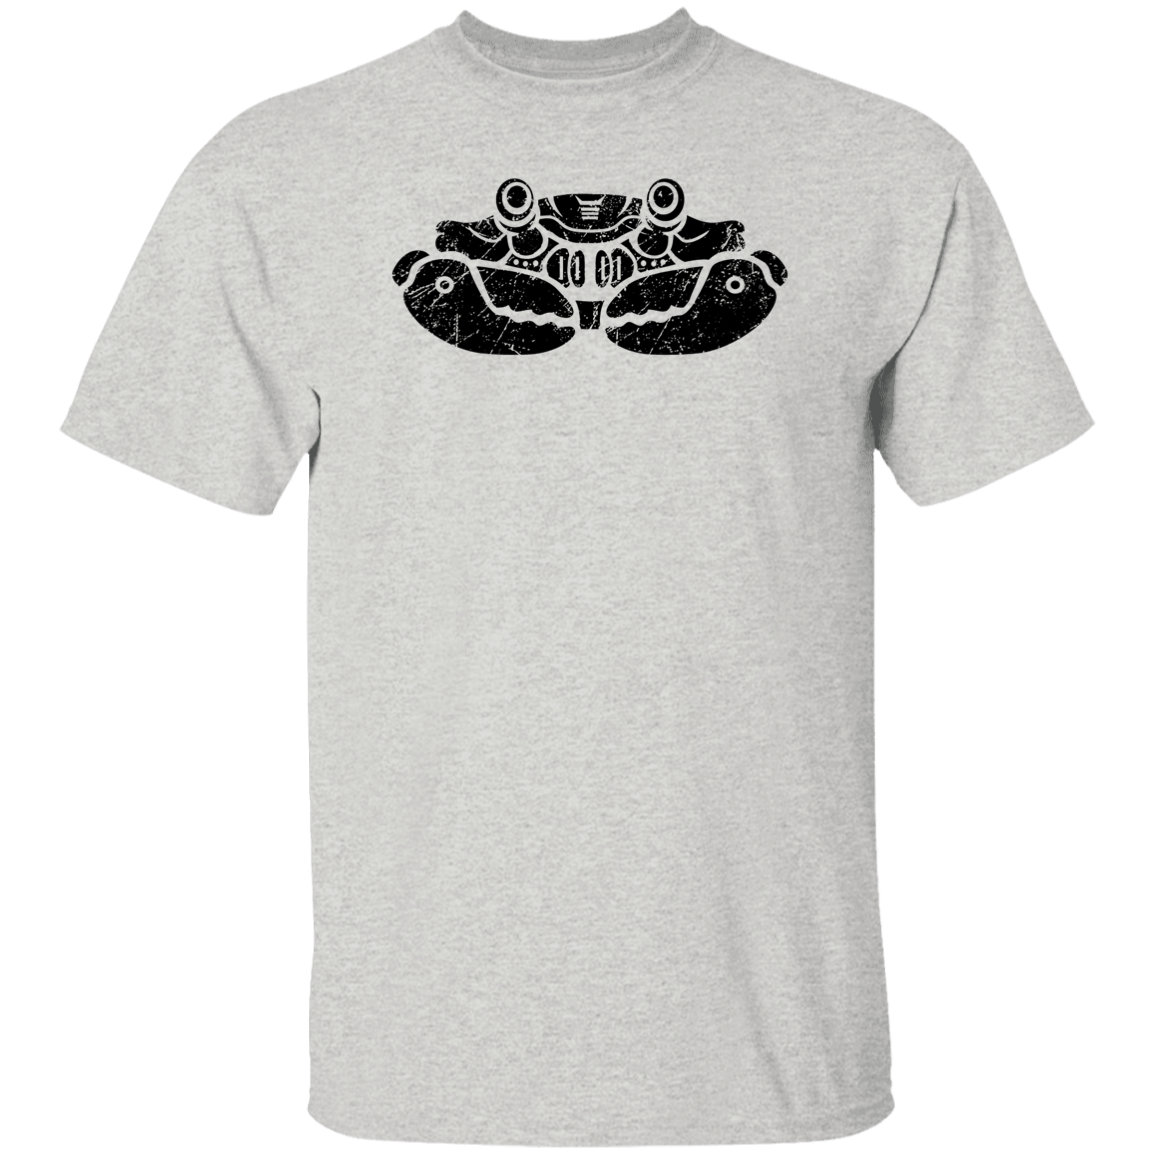 Black Distressed Emblem T-Shirt for Kids (Crab/Clamps)